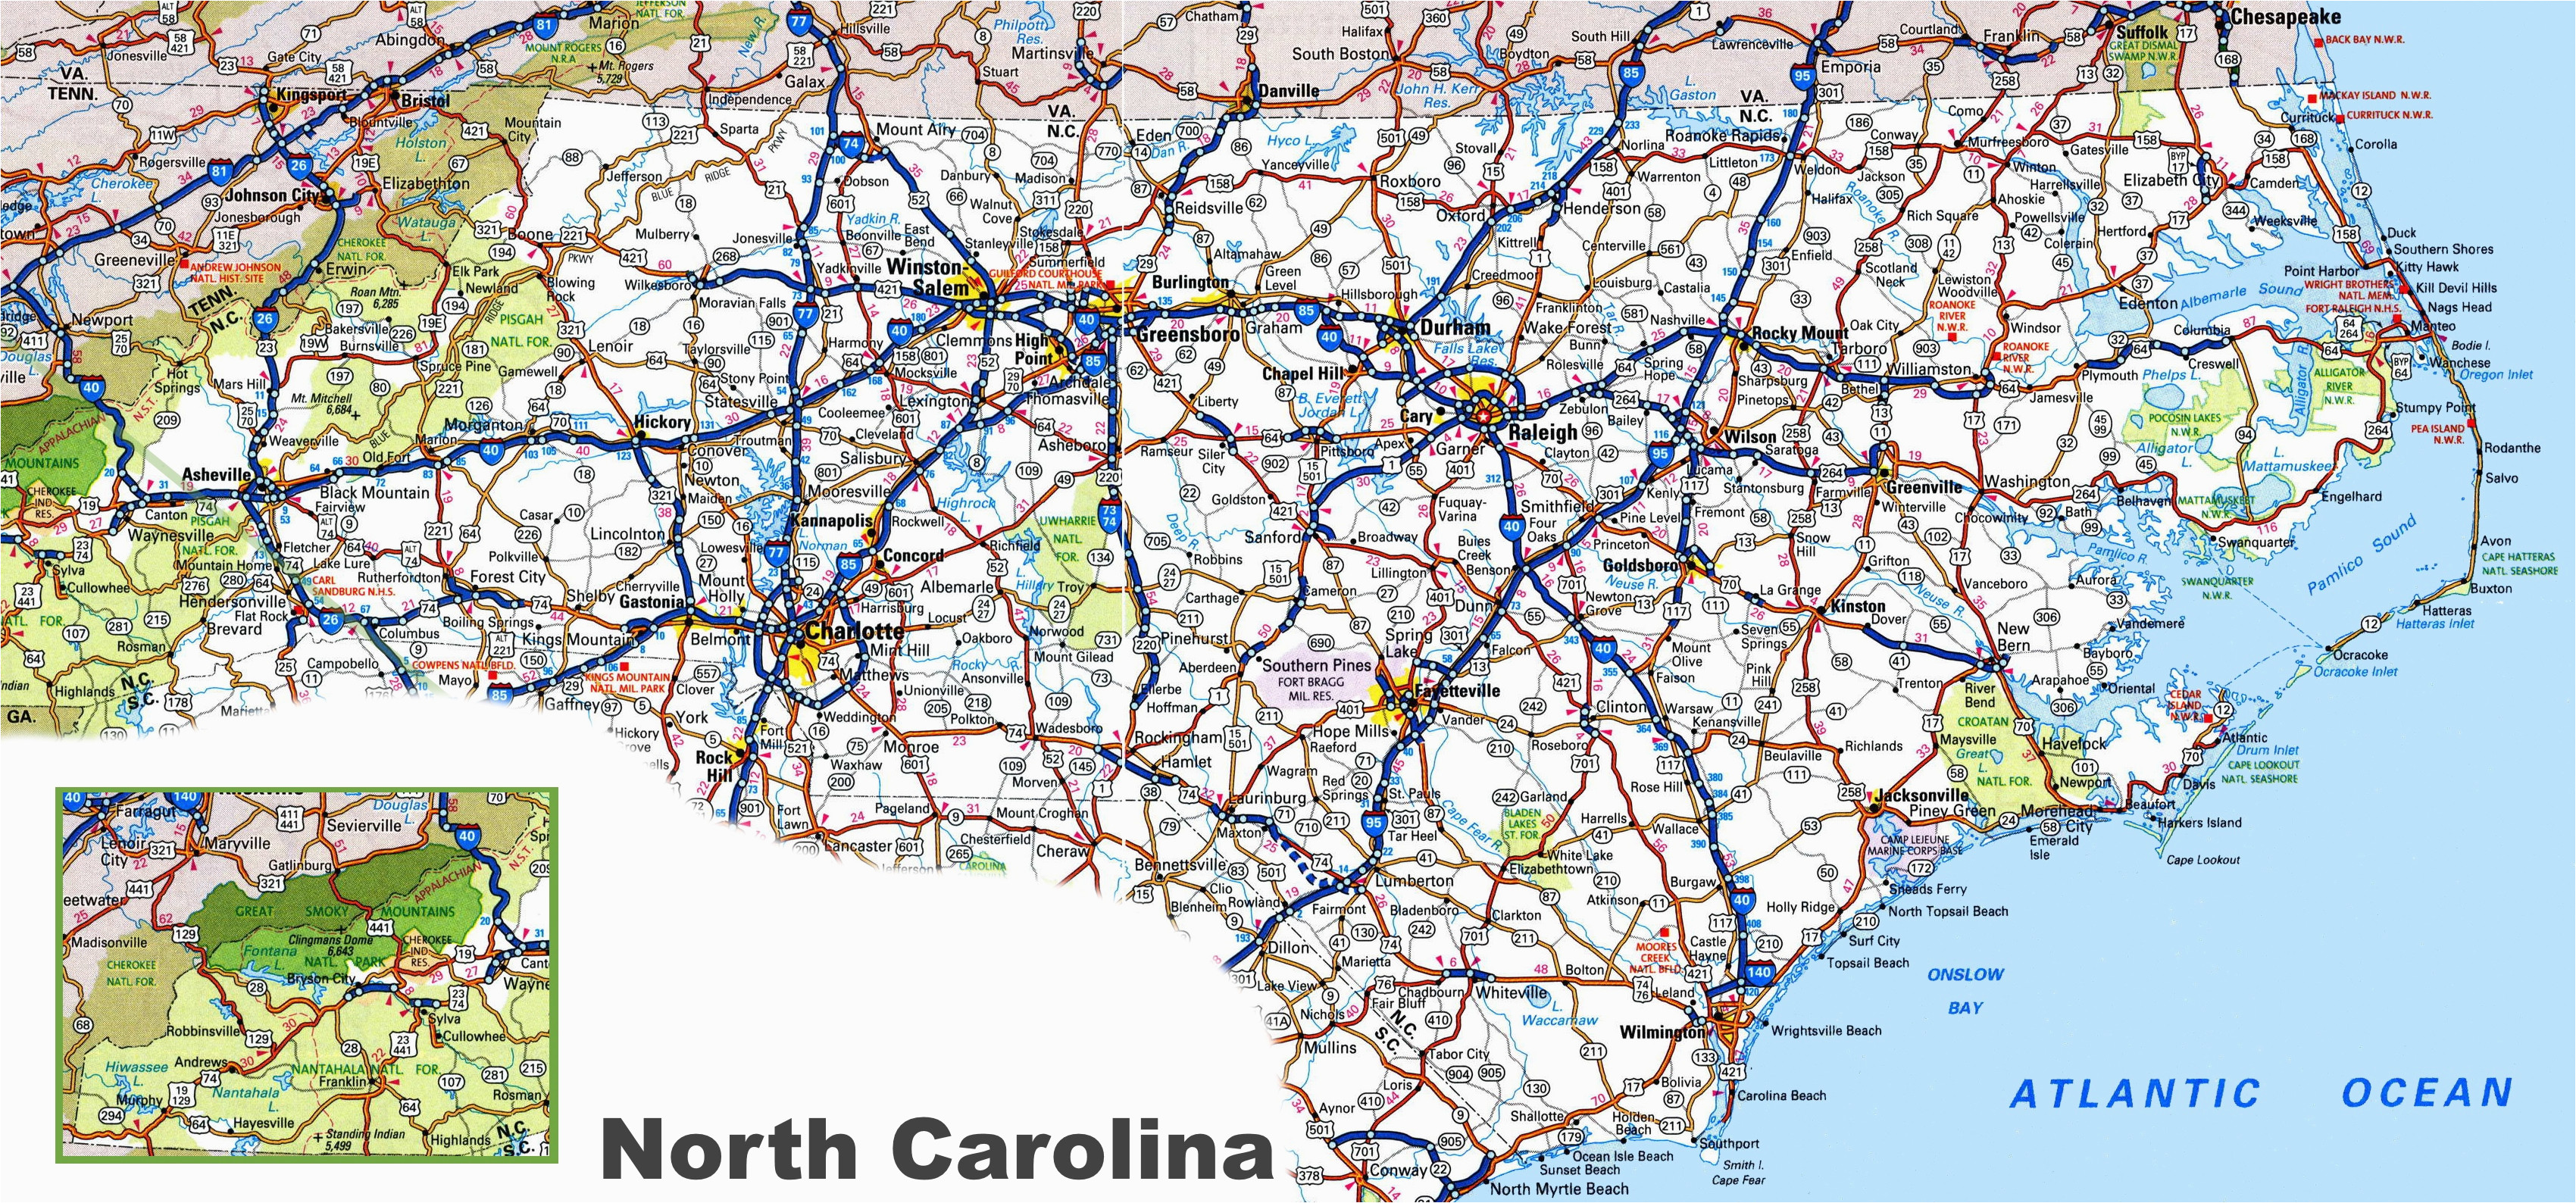 Denver north Carolina Map north Carolina Road Map